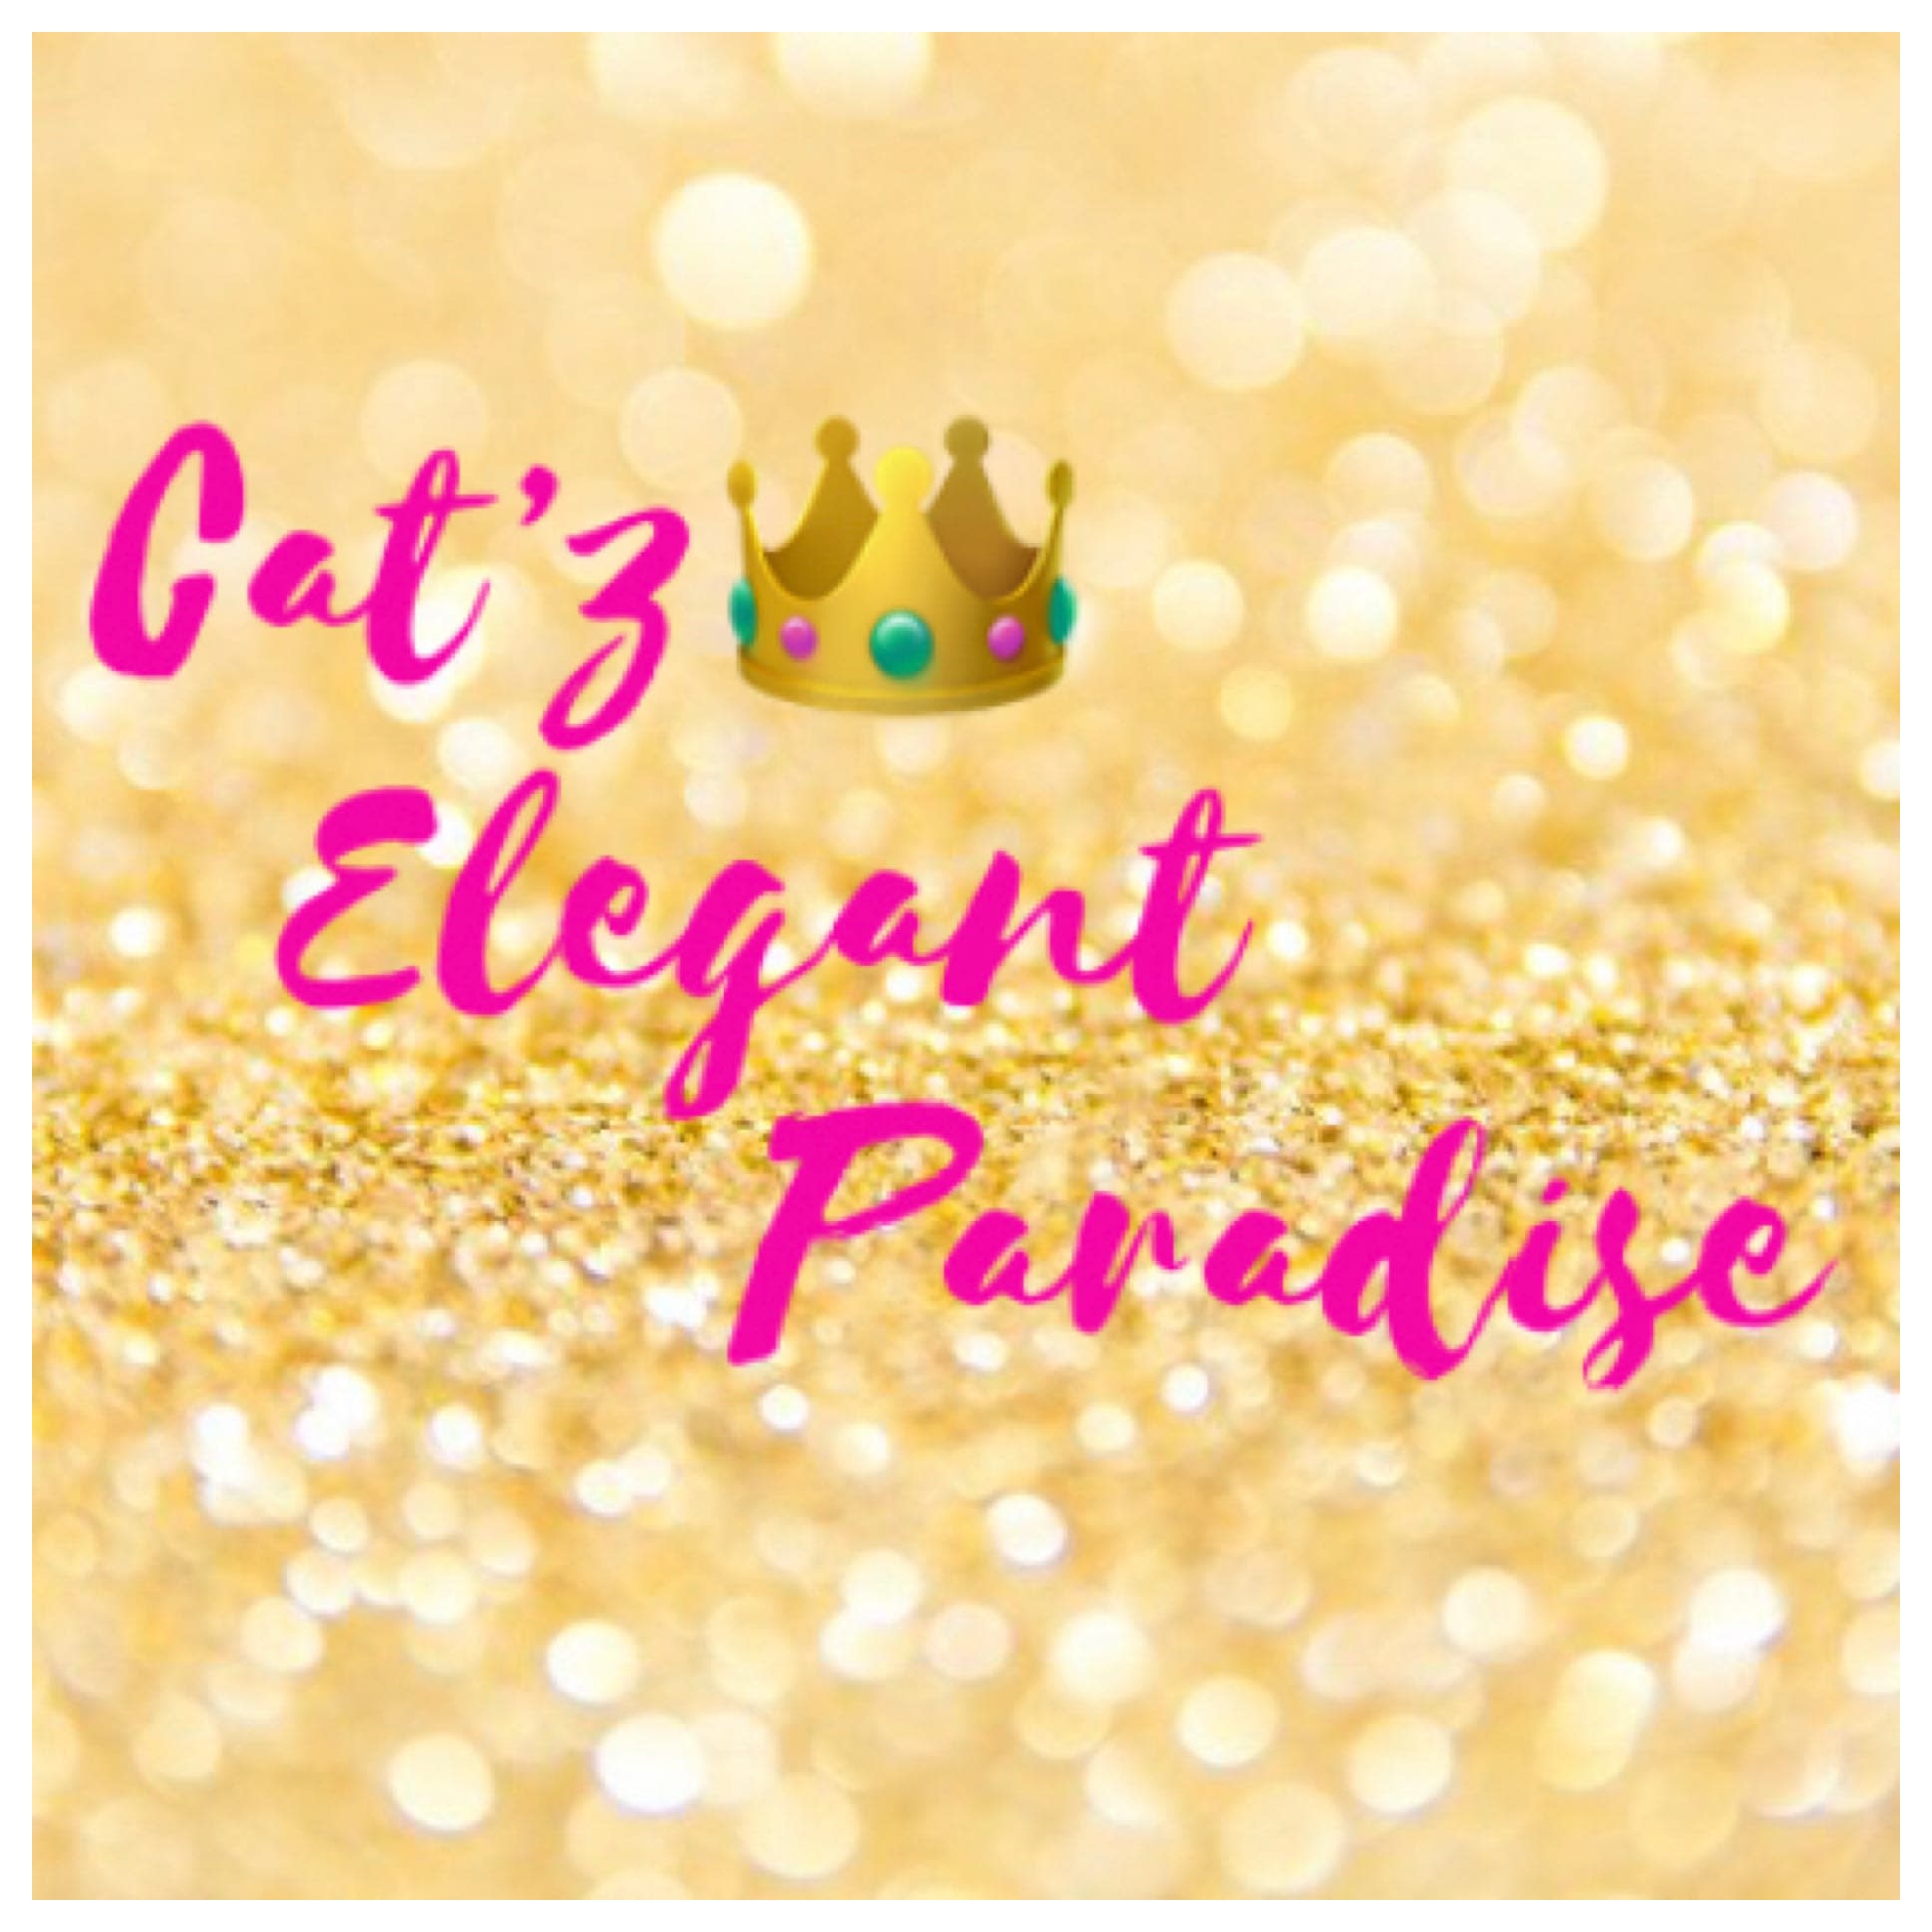 Cat’z Elegant Paradise